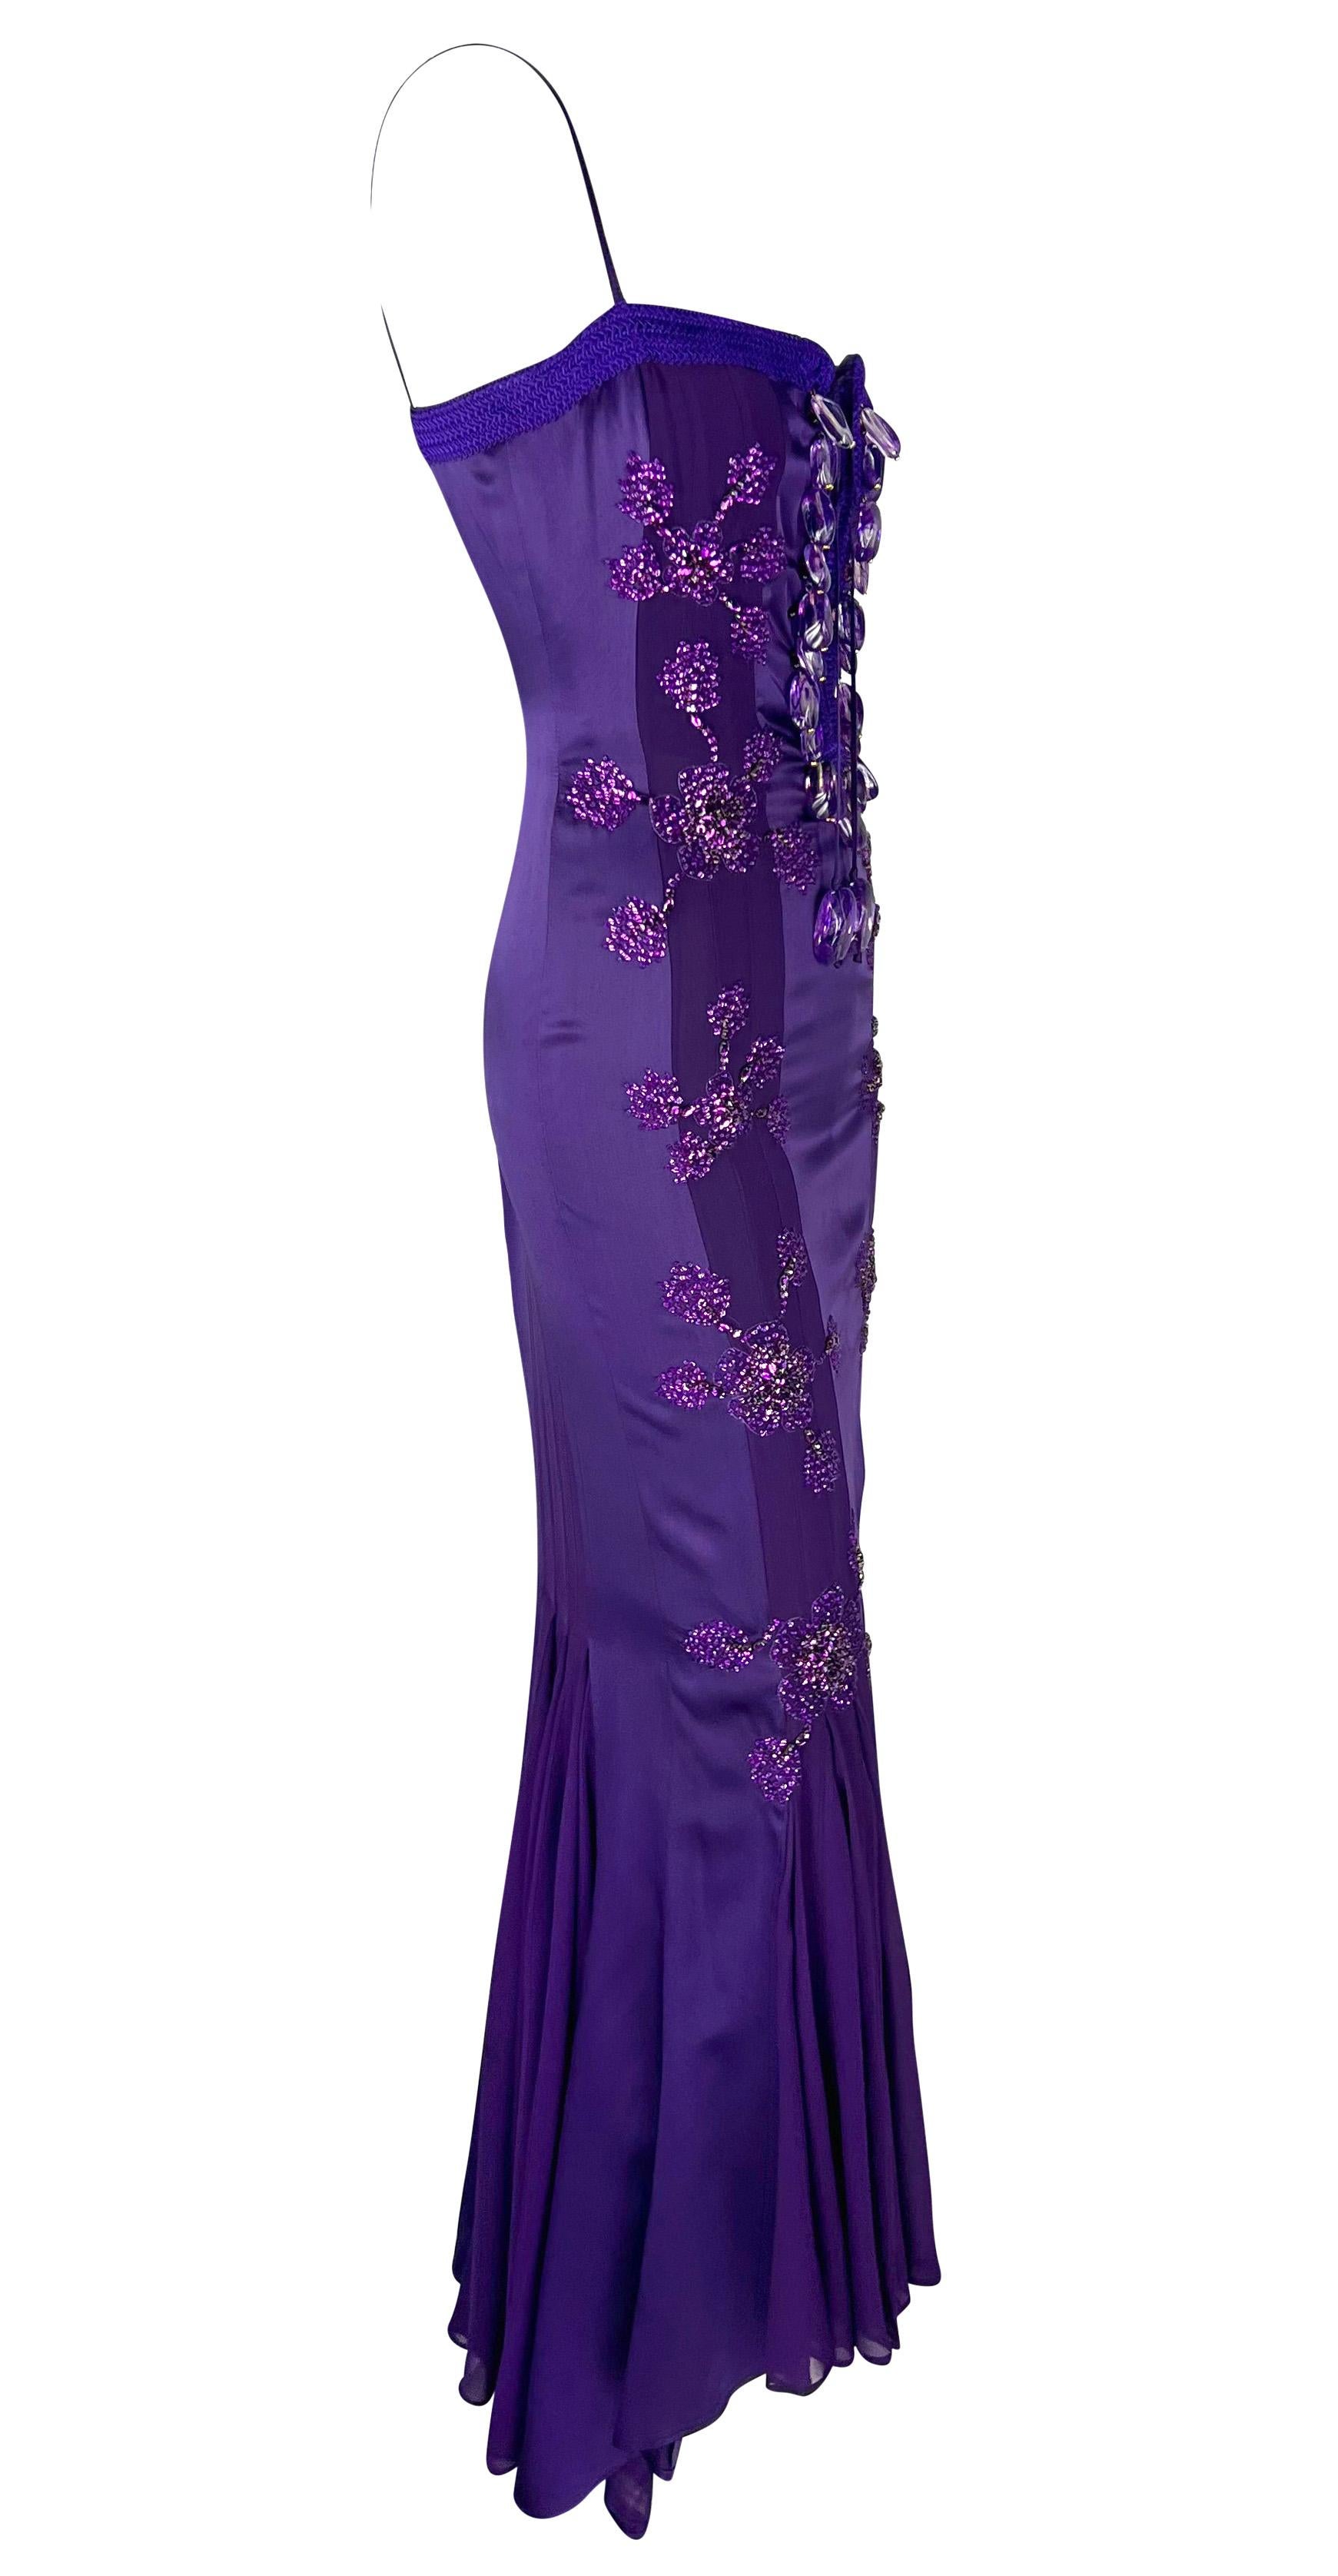 S/S 2005 Emanuel Ungaro by Giambattista Valli Rhinestone Purple Lace-Up Gown For Sale 9